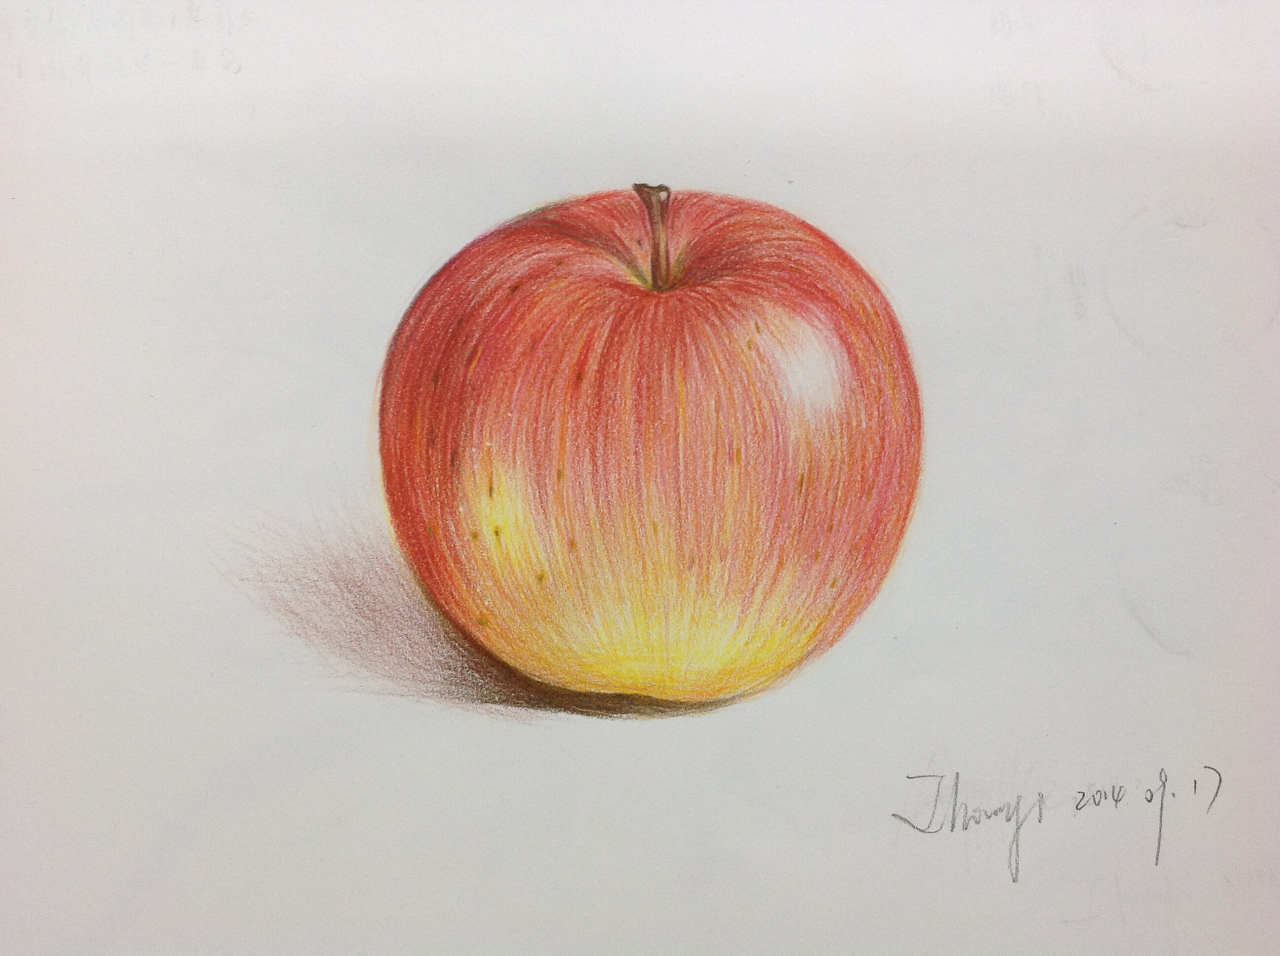 曹老师教你画素描之静物素描 苹果的画法_哔哩哔哩 (゜-゜)つロ 干杯~-bilibili